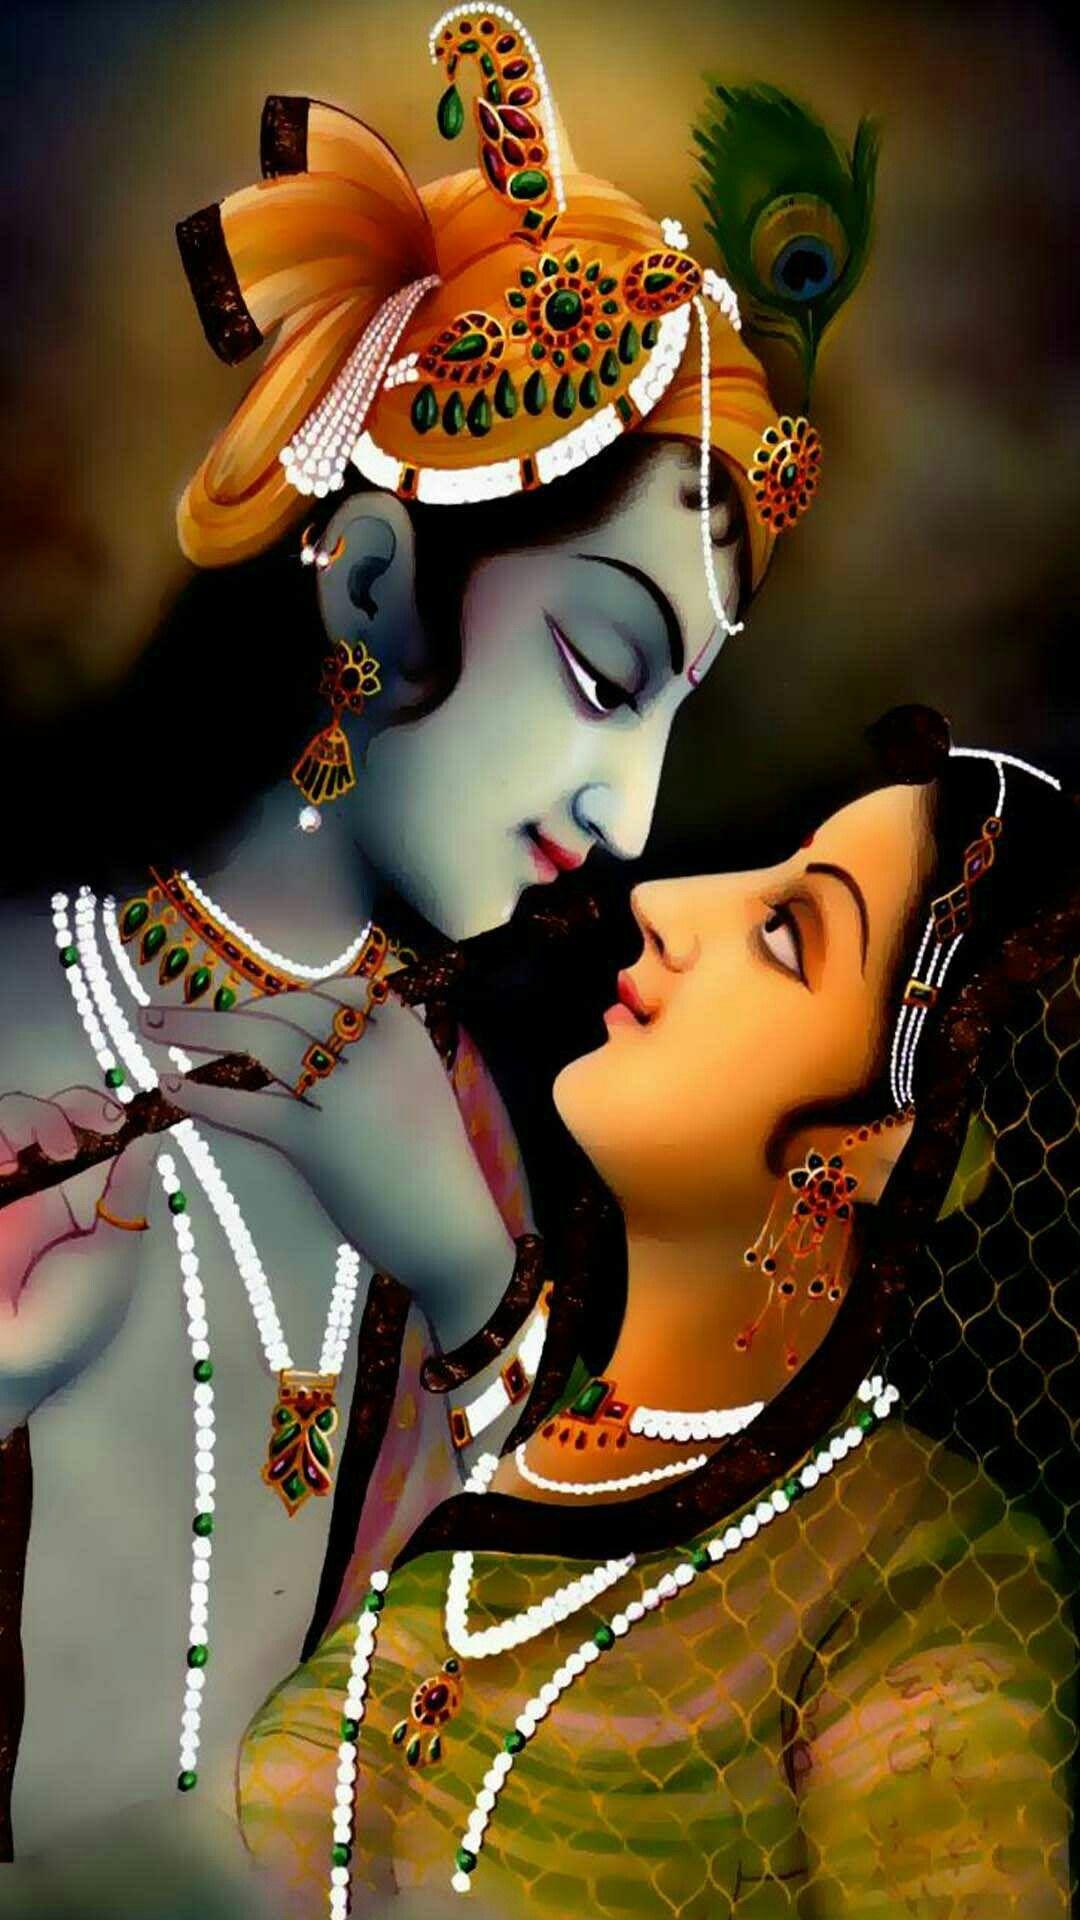 Radha And Krishna Love Wallpapers - Wallpaper Cave